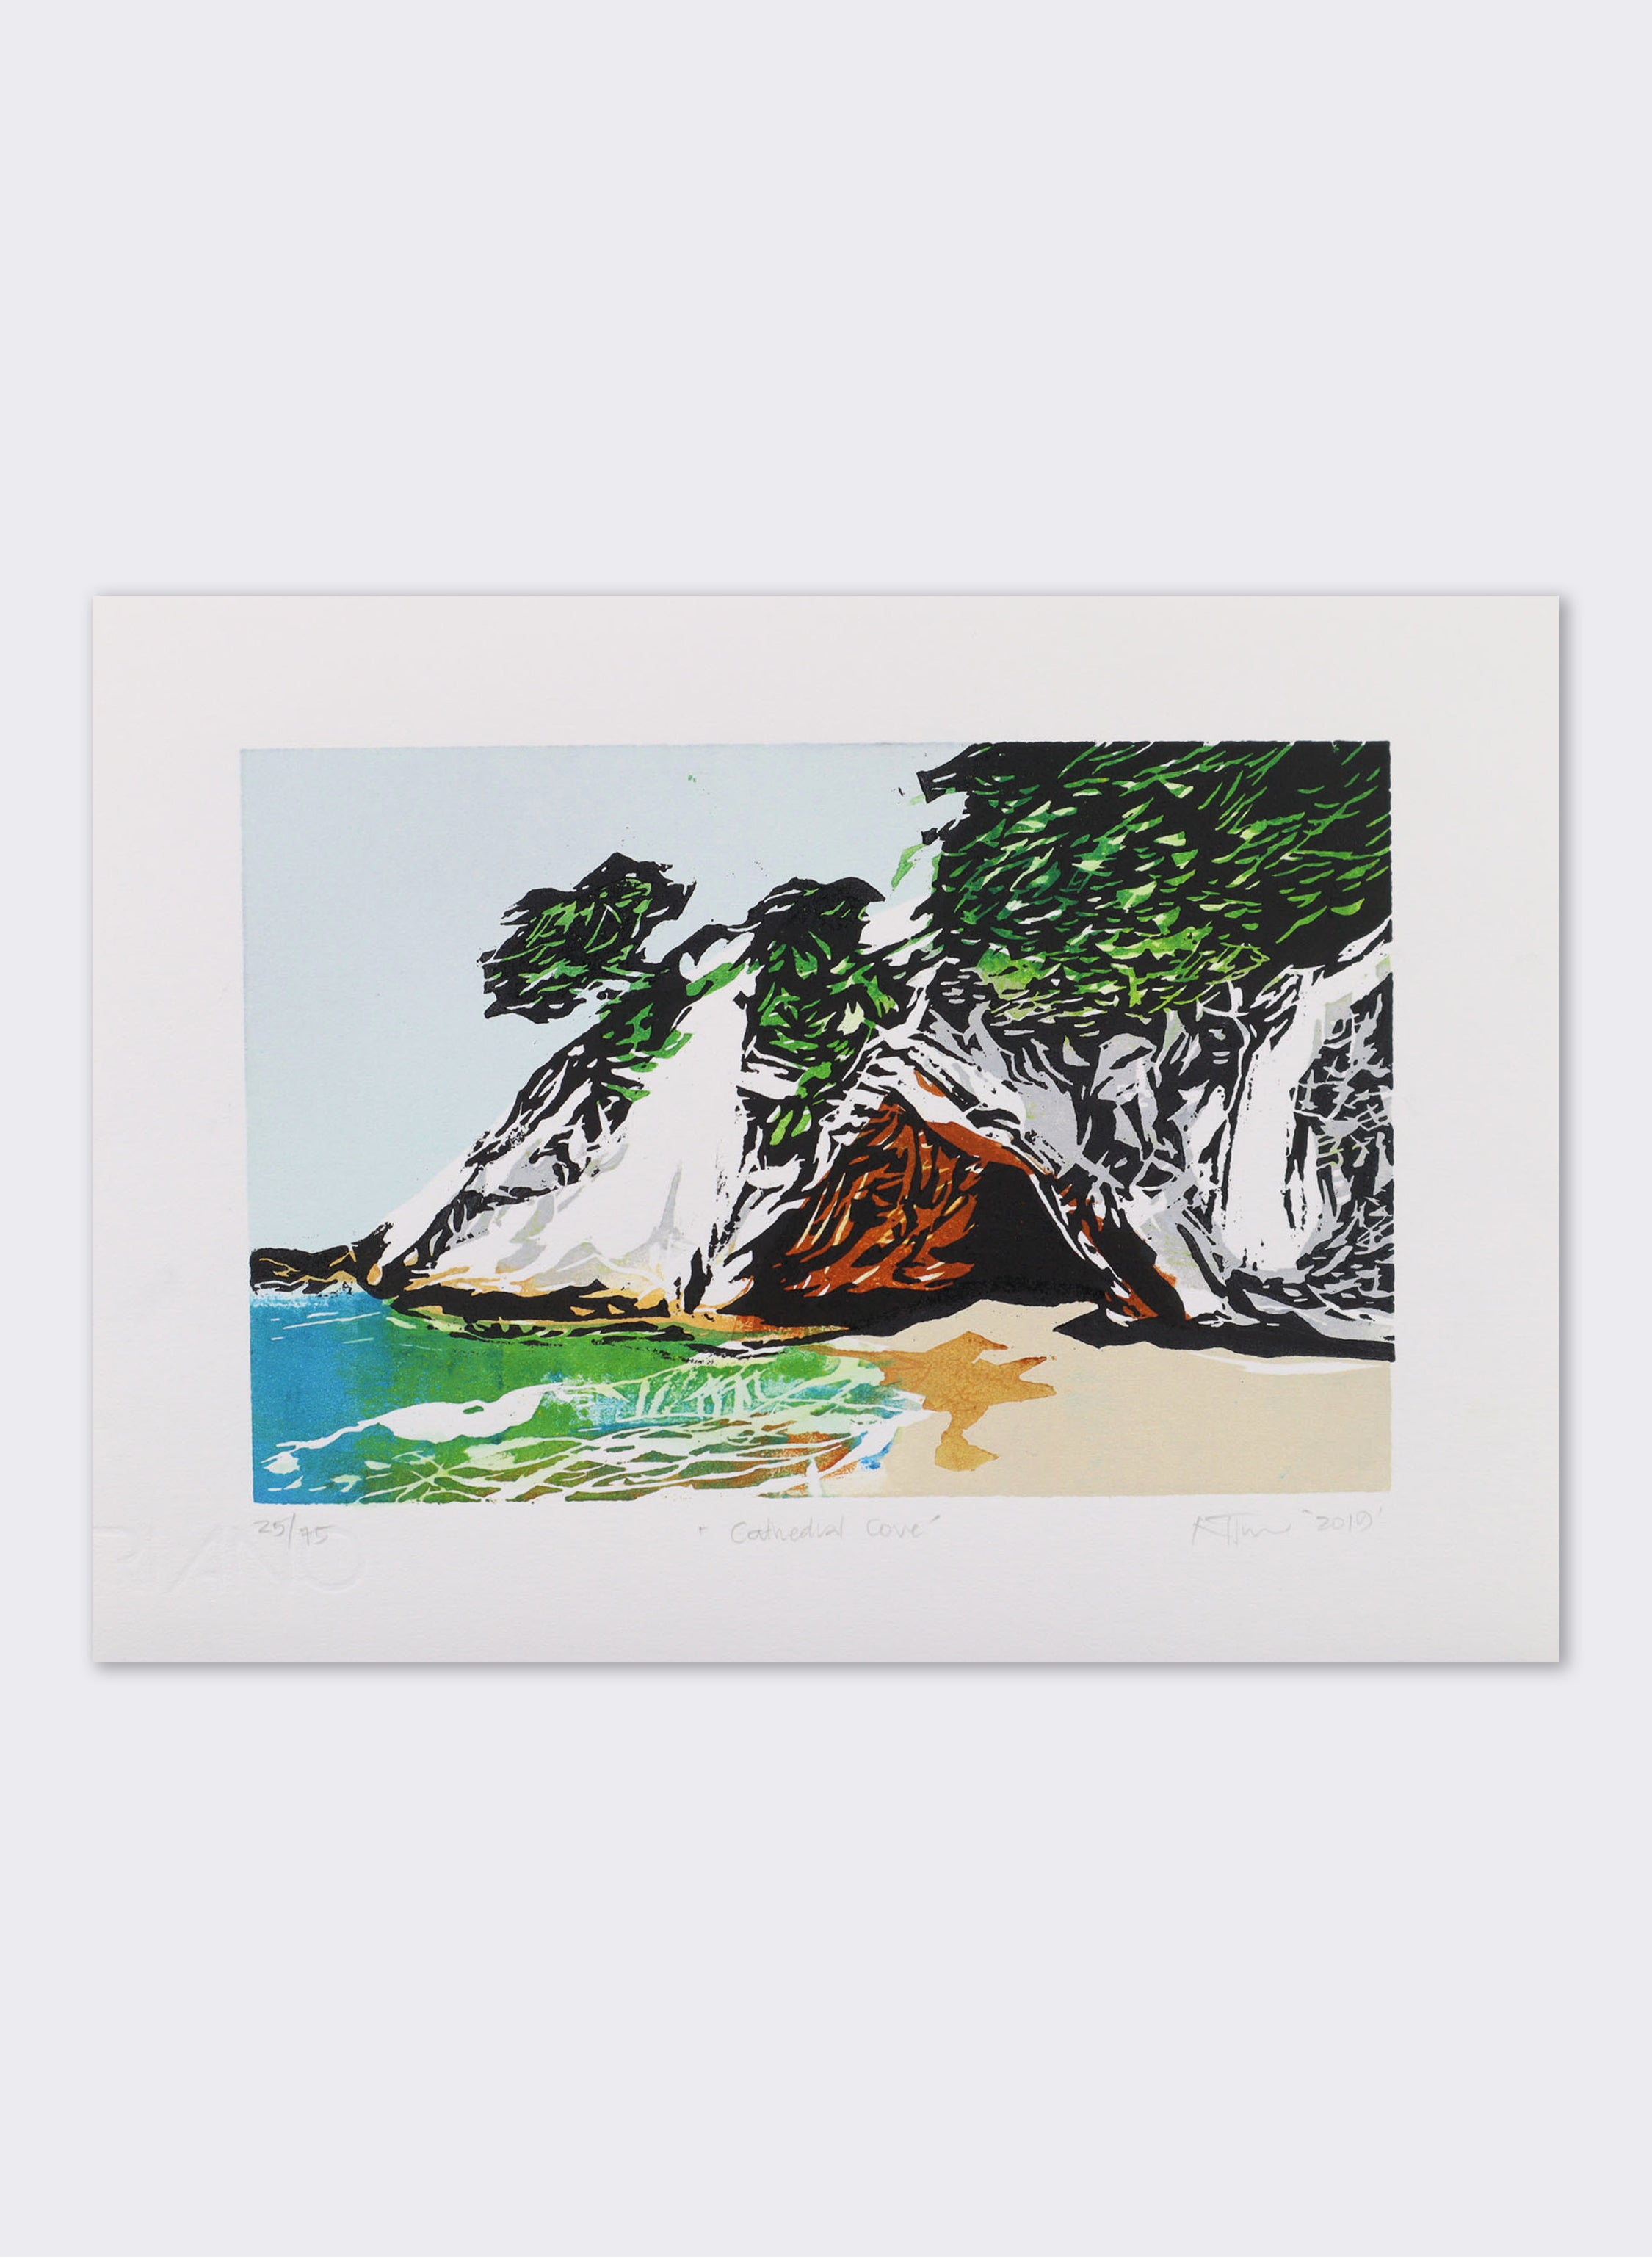 Cathedral Cove - Woodblock Print